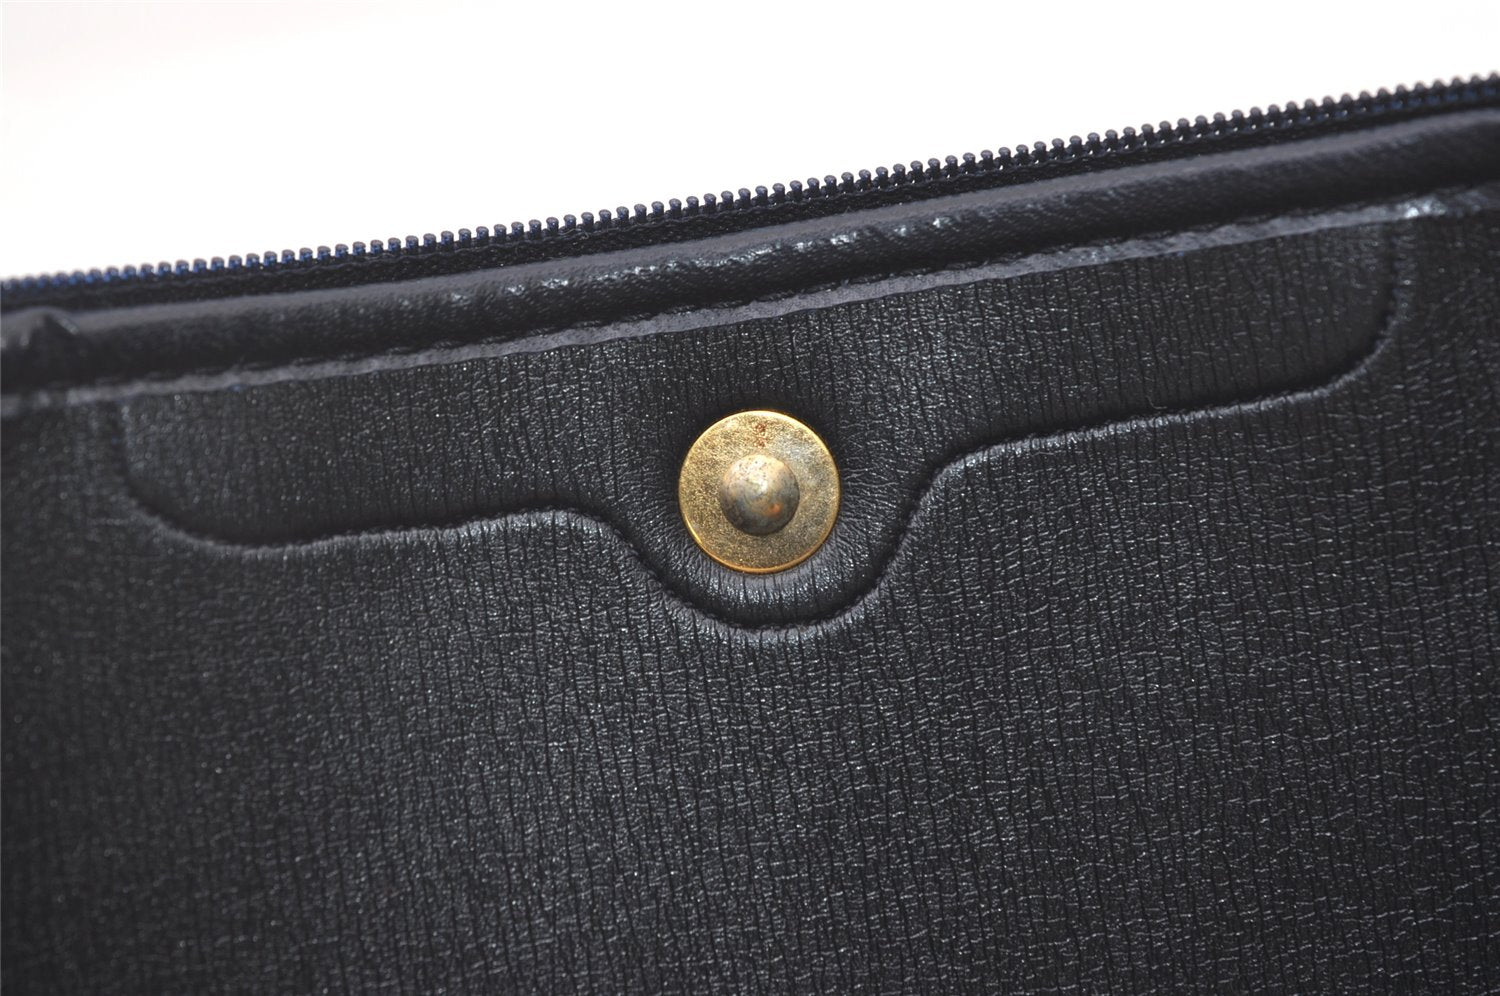 Authentic Christian Dior Trotter Clutch Bag Purse Canvas Leather Navy Blue 7759J